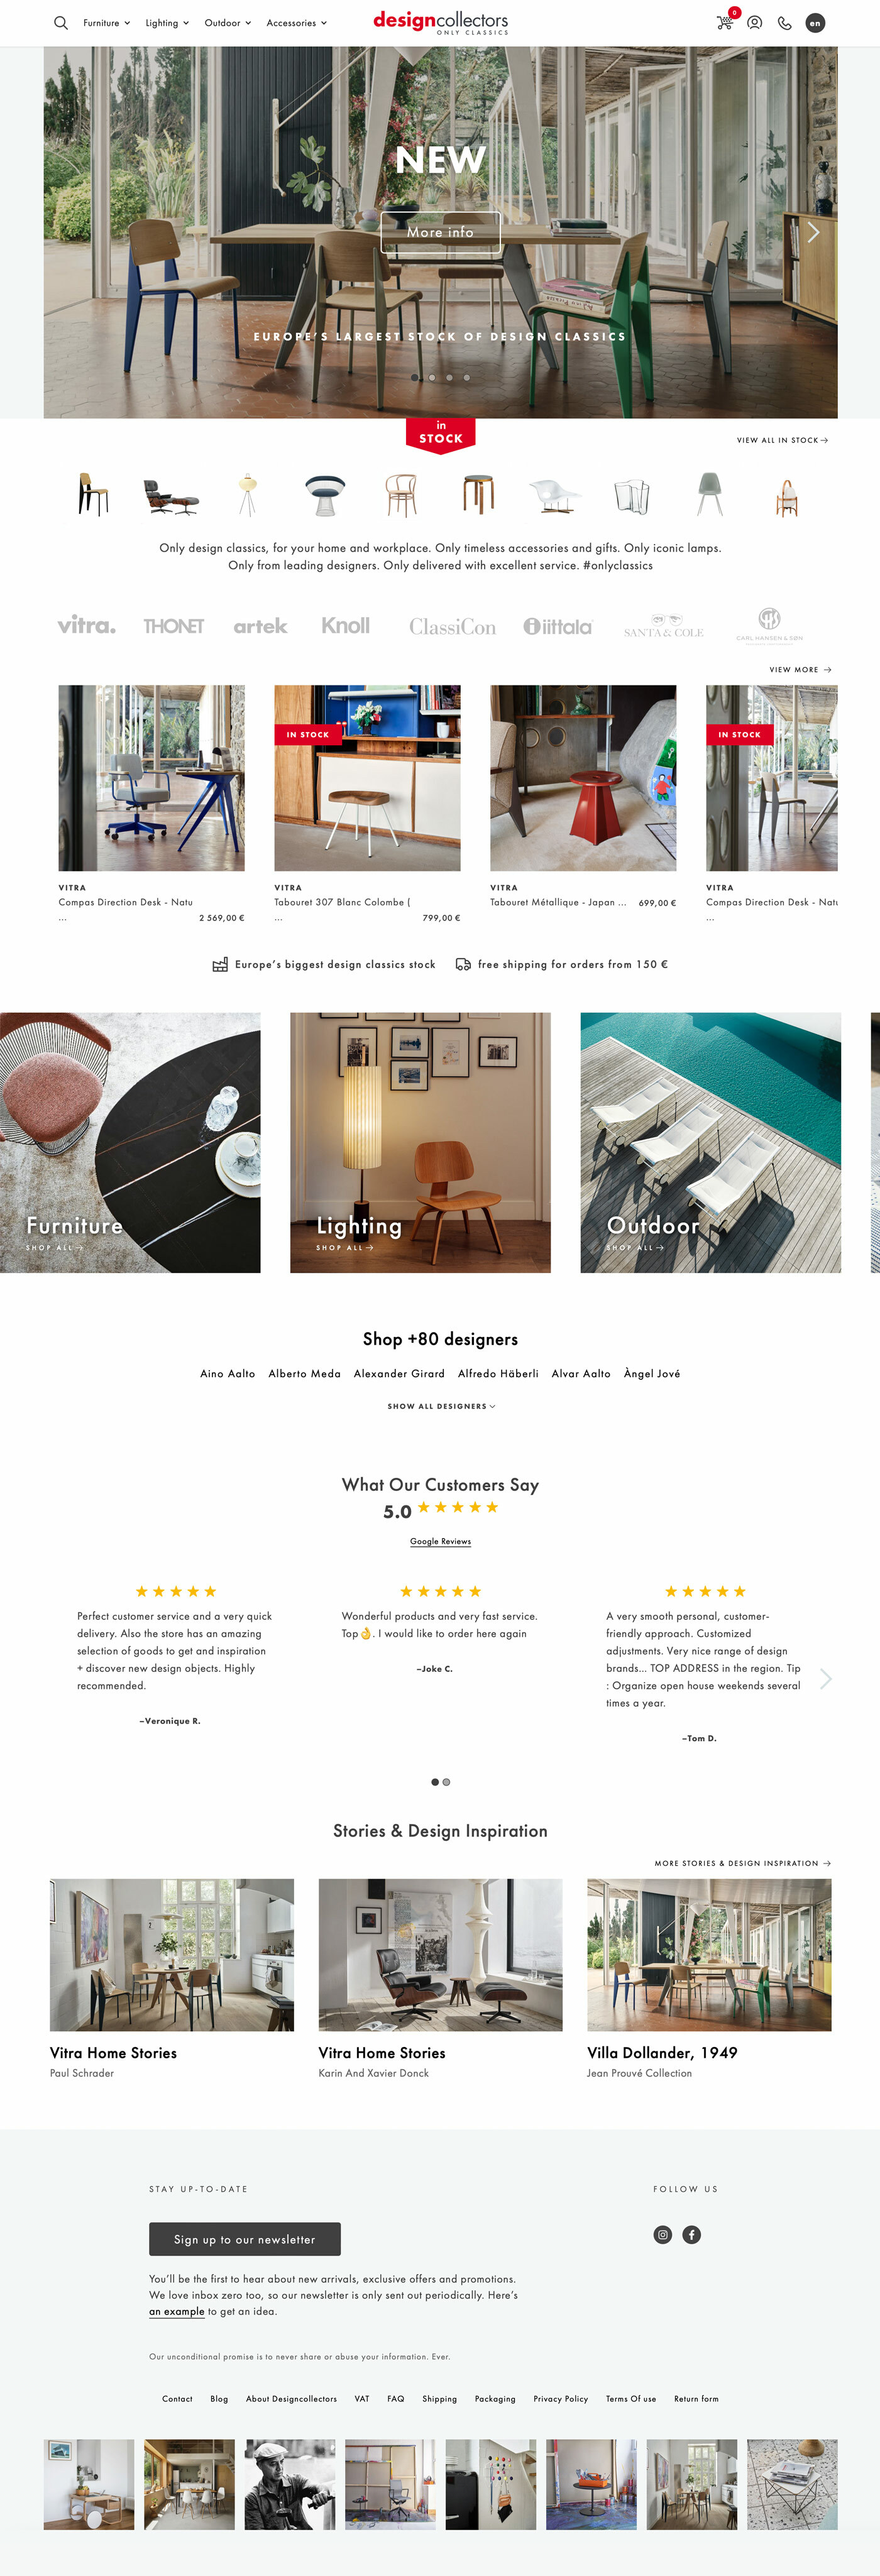 Designcollectors website design - homepage and shop webpages on mobile